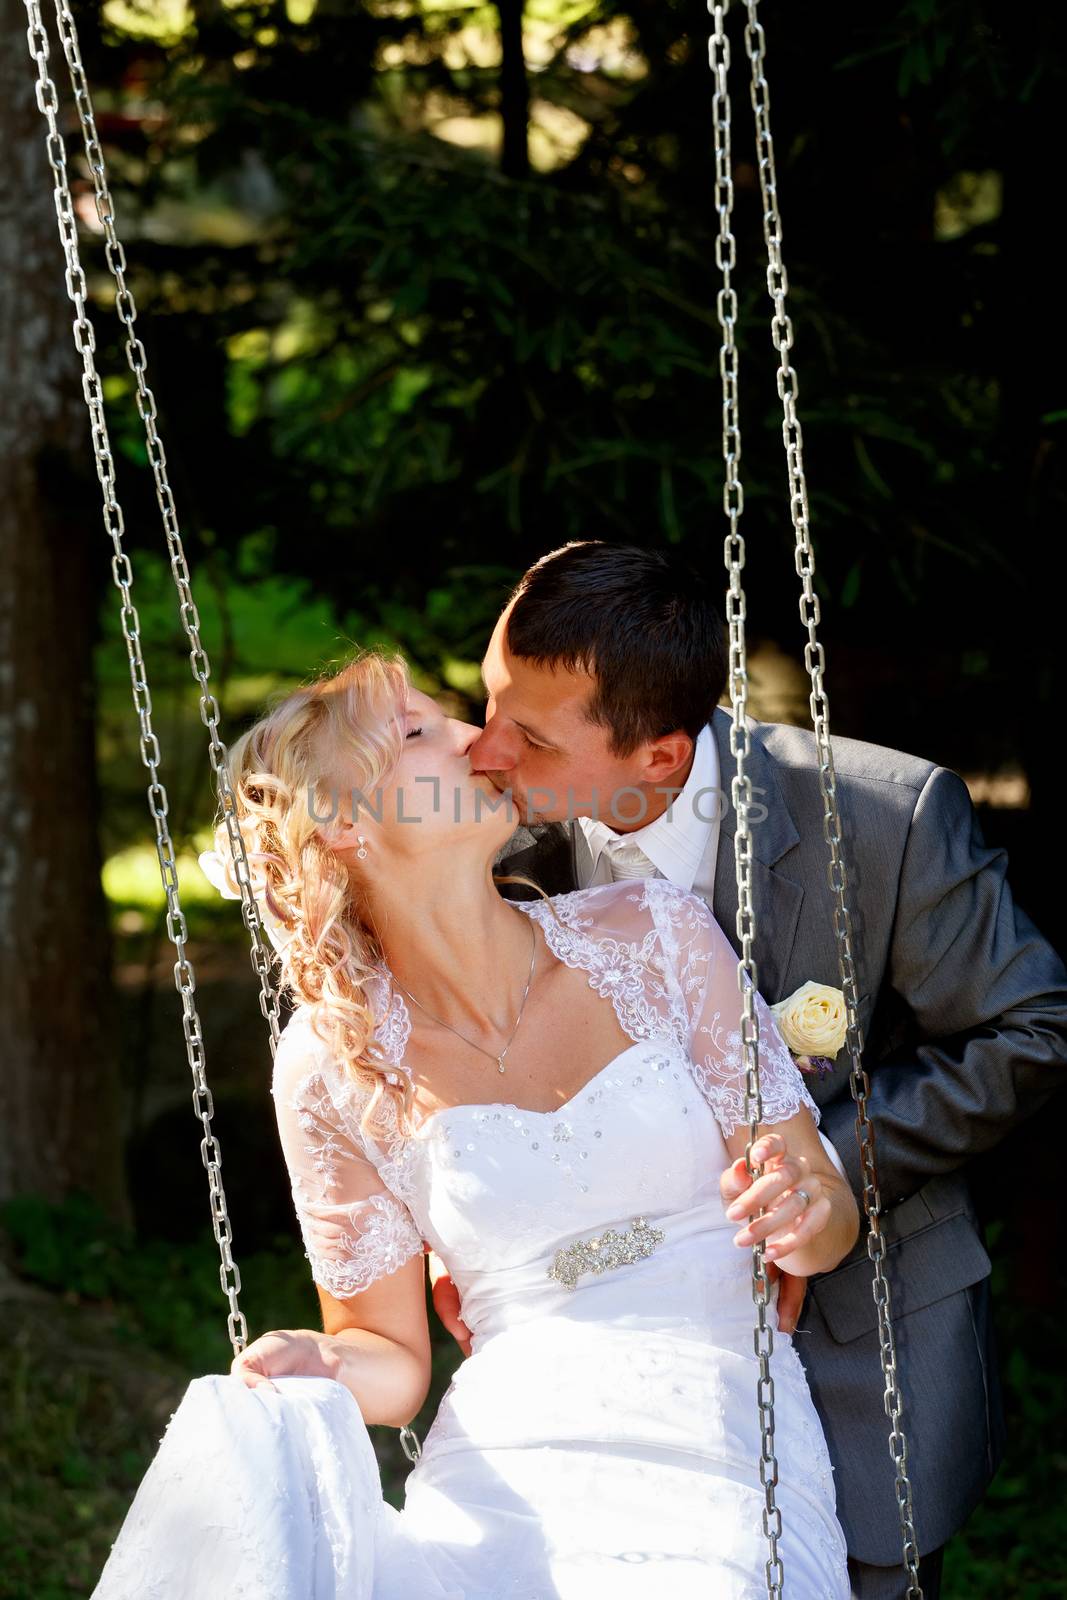 beautiful young wedding couple kissing by artush